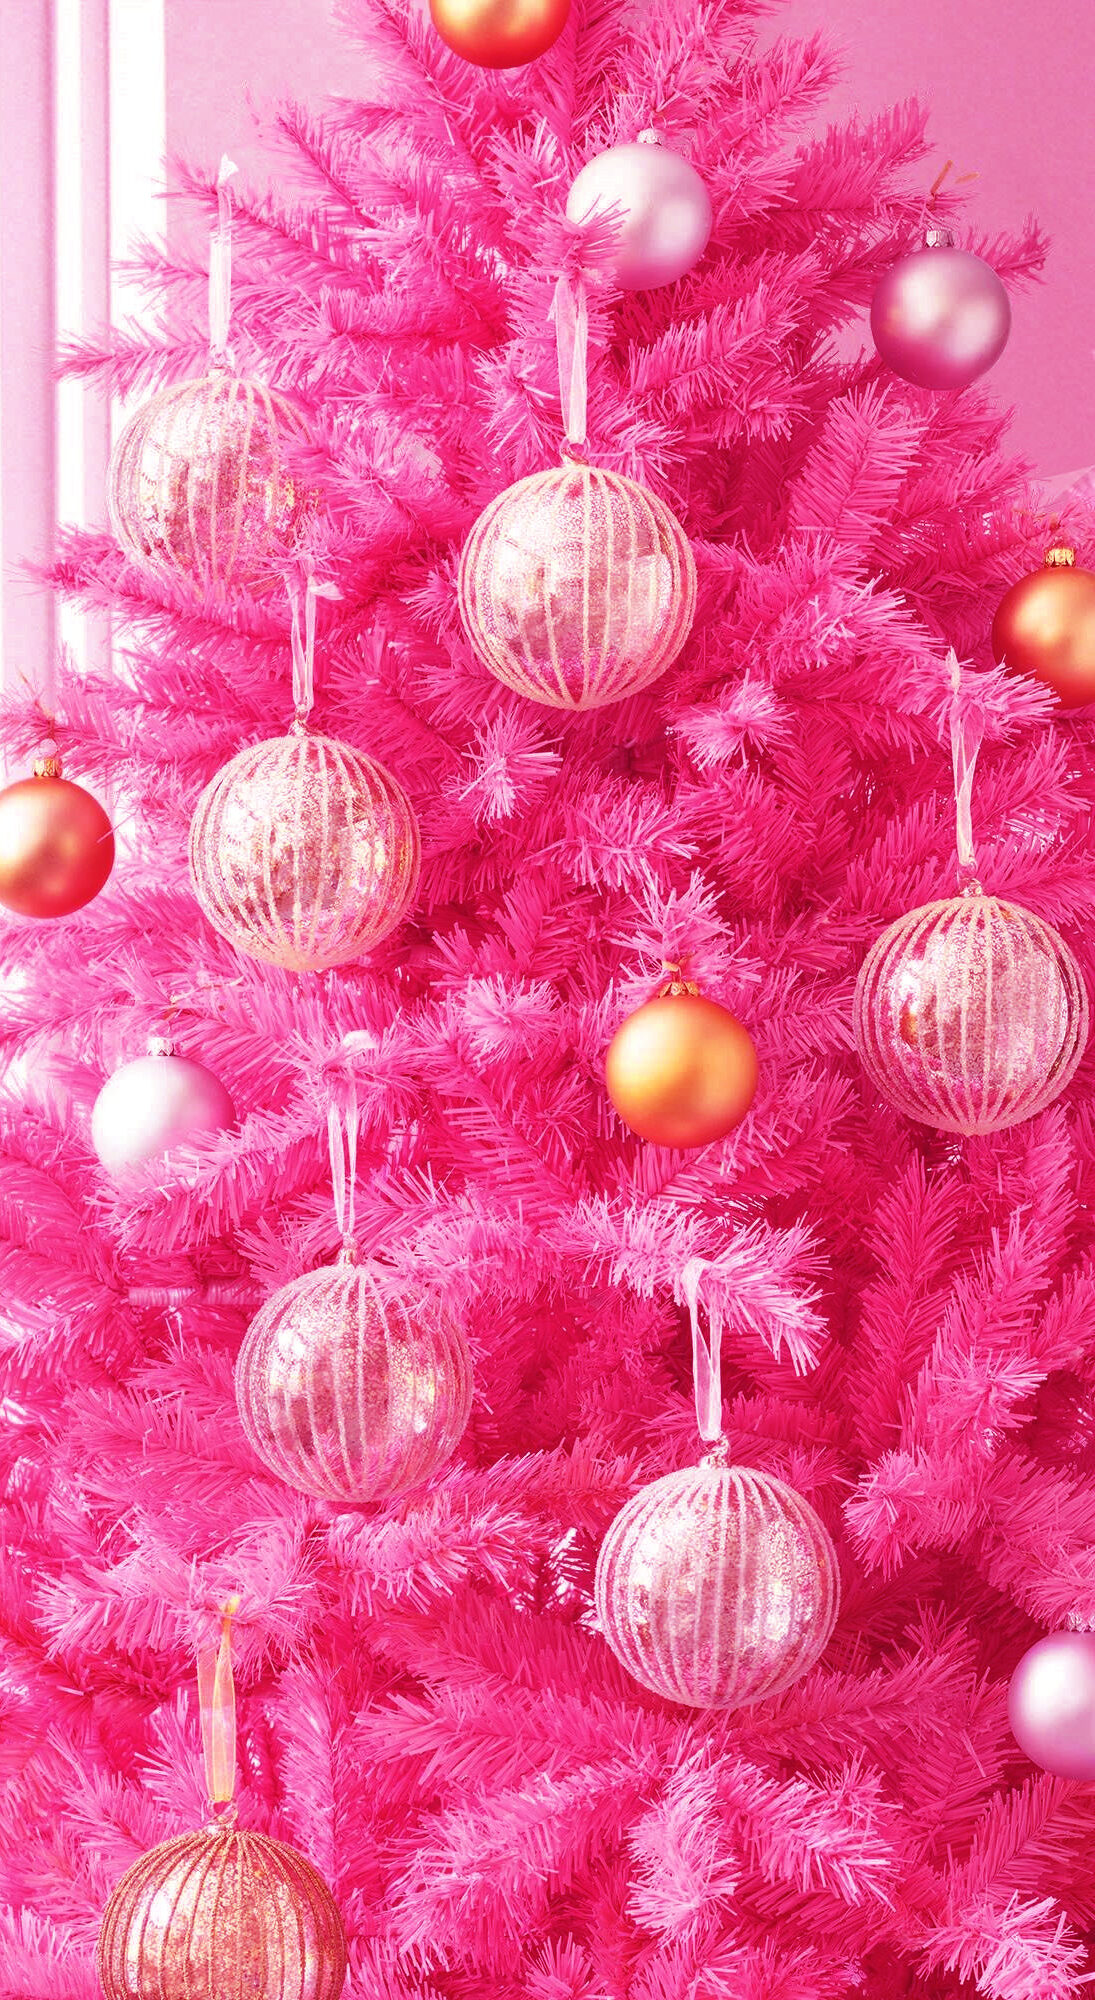 Pink Christmas mobile wallpaper cute  Free Photo  rawpixel